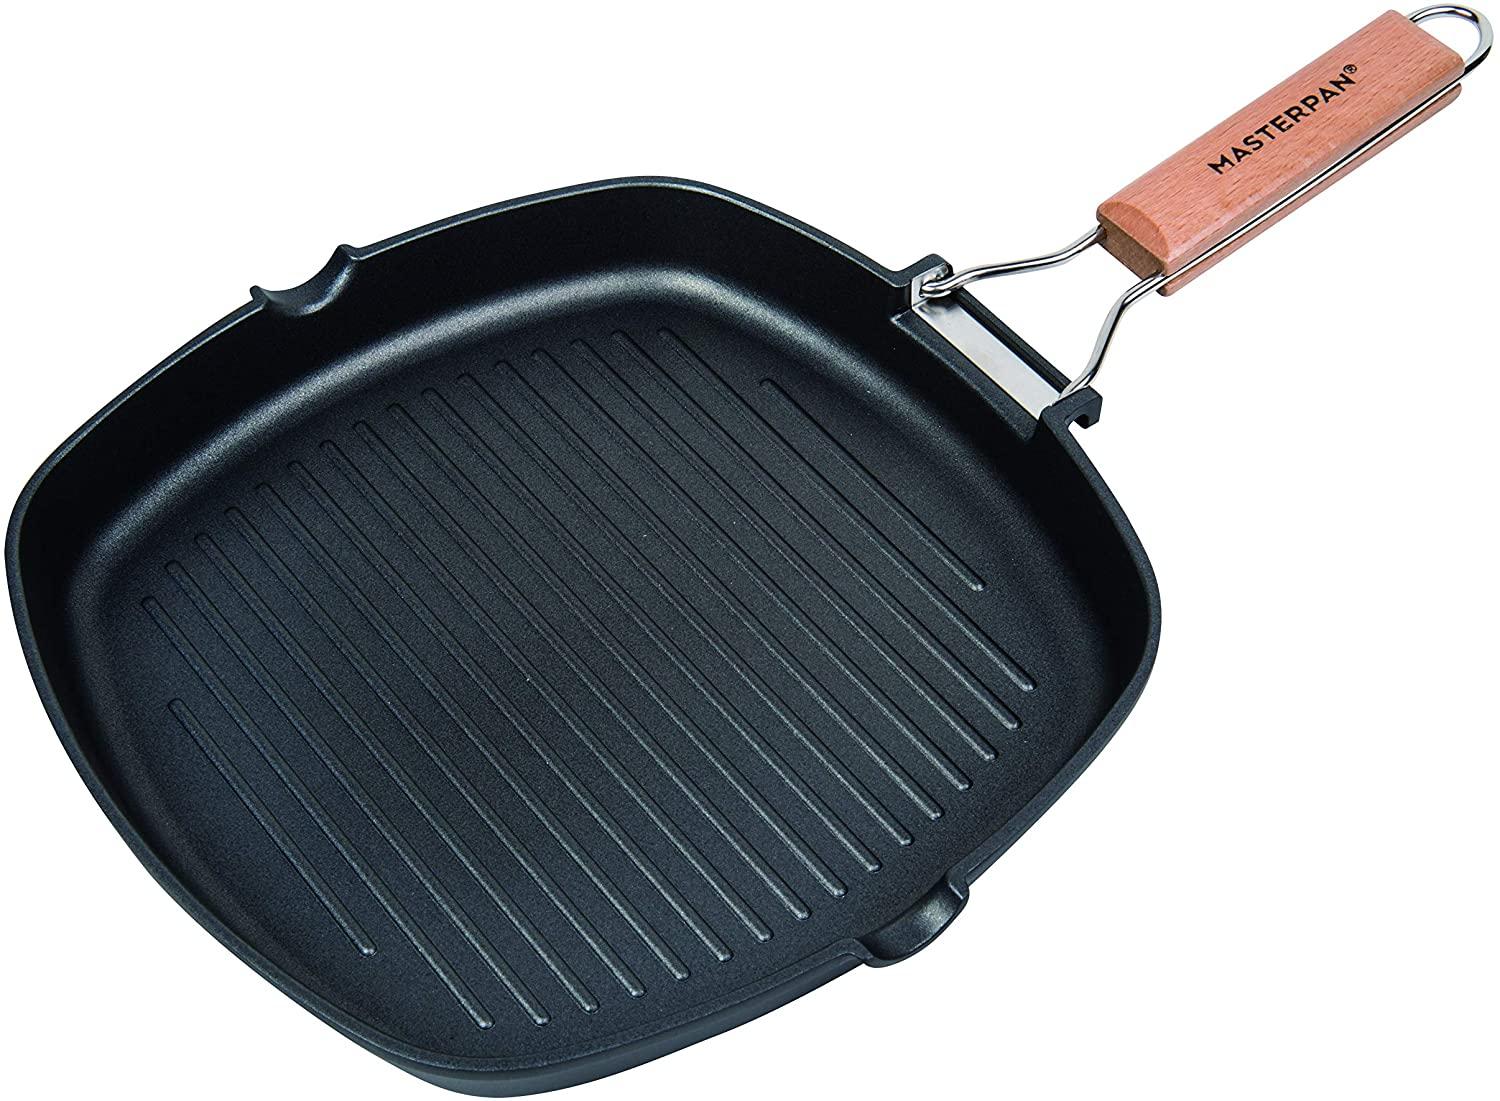 https://www.dontwasteyourmoney.com/wp-content/uploads/2022/03/masterpan-aluminum-pfoa-free-nonstick-grill-pan-8-inch-nonstick-grill-pan.jpg